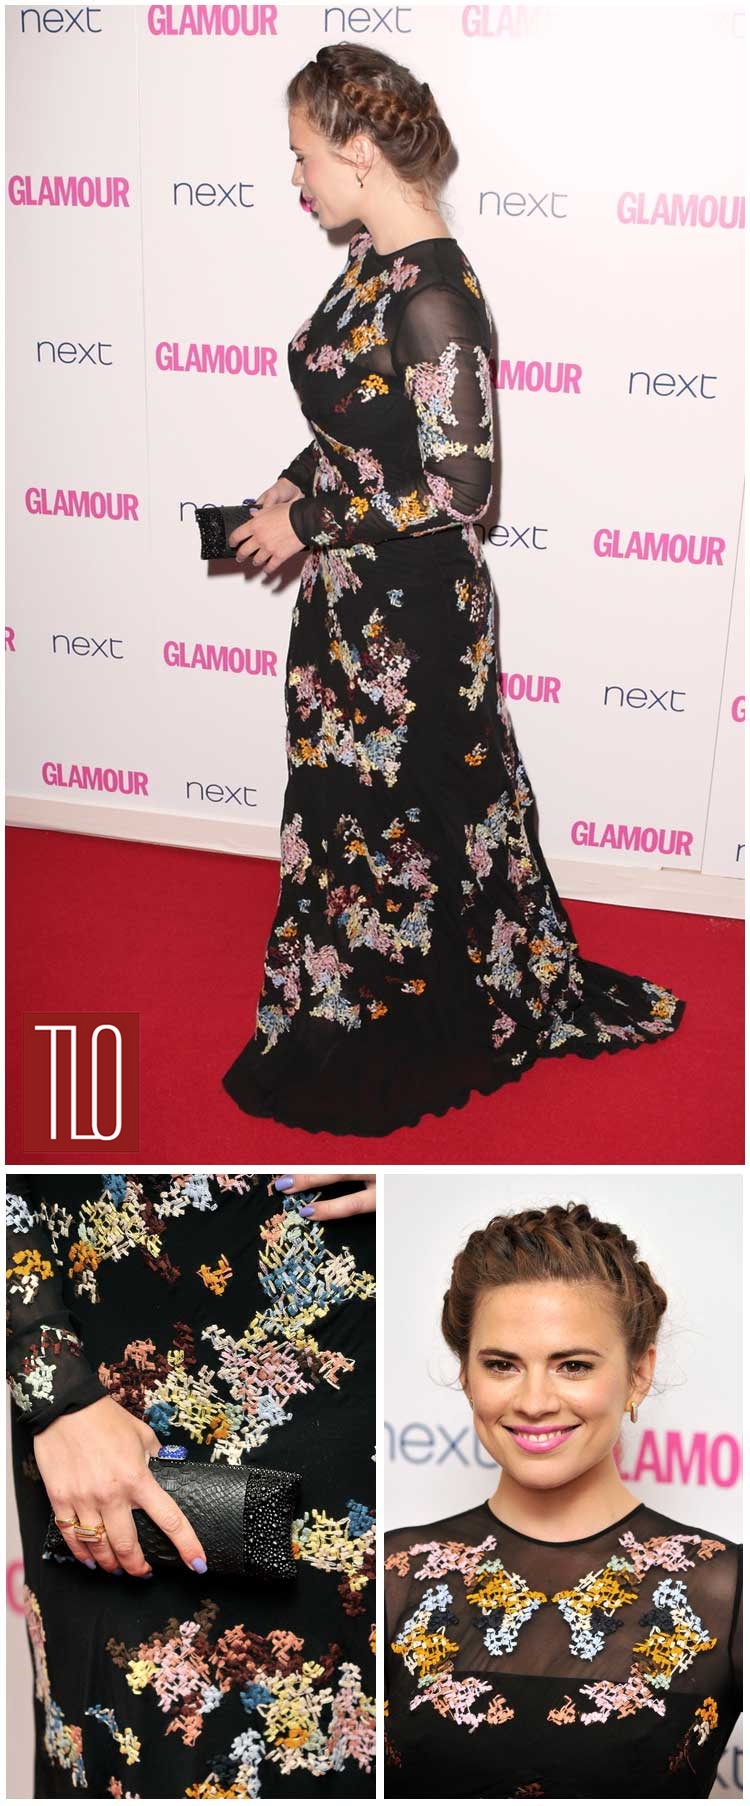 Hayley-Atwell-rmano-Scervino-2014-Glamour-Women-Year-Awards-Tom-Lorenzo-Site-TLO (2)